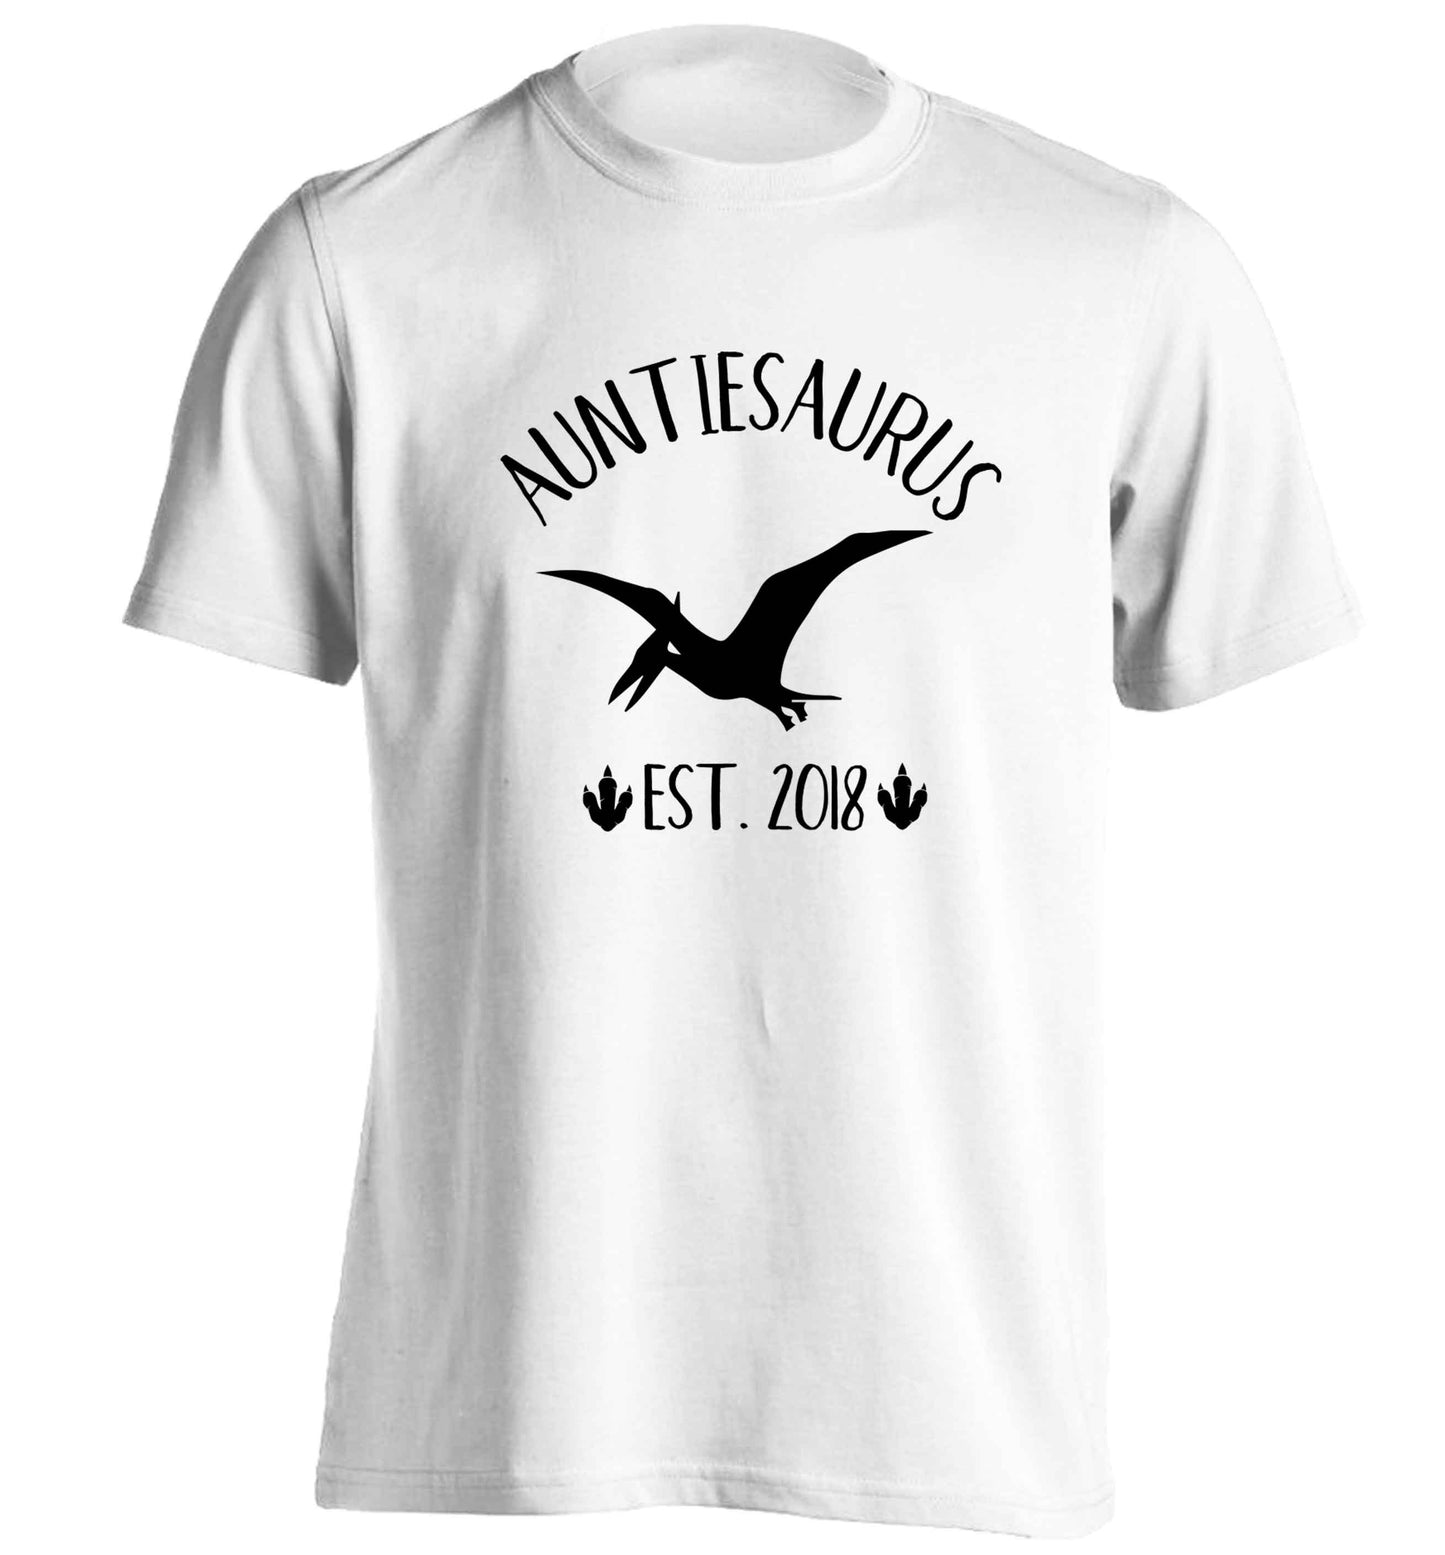 Personalised auntiesaurus since (custom date) adults unisex white Tshirt 2XL